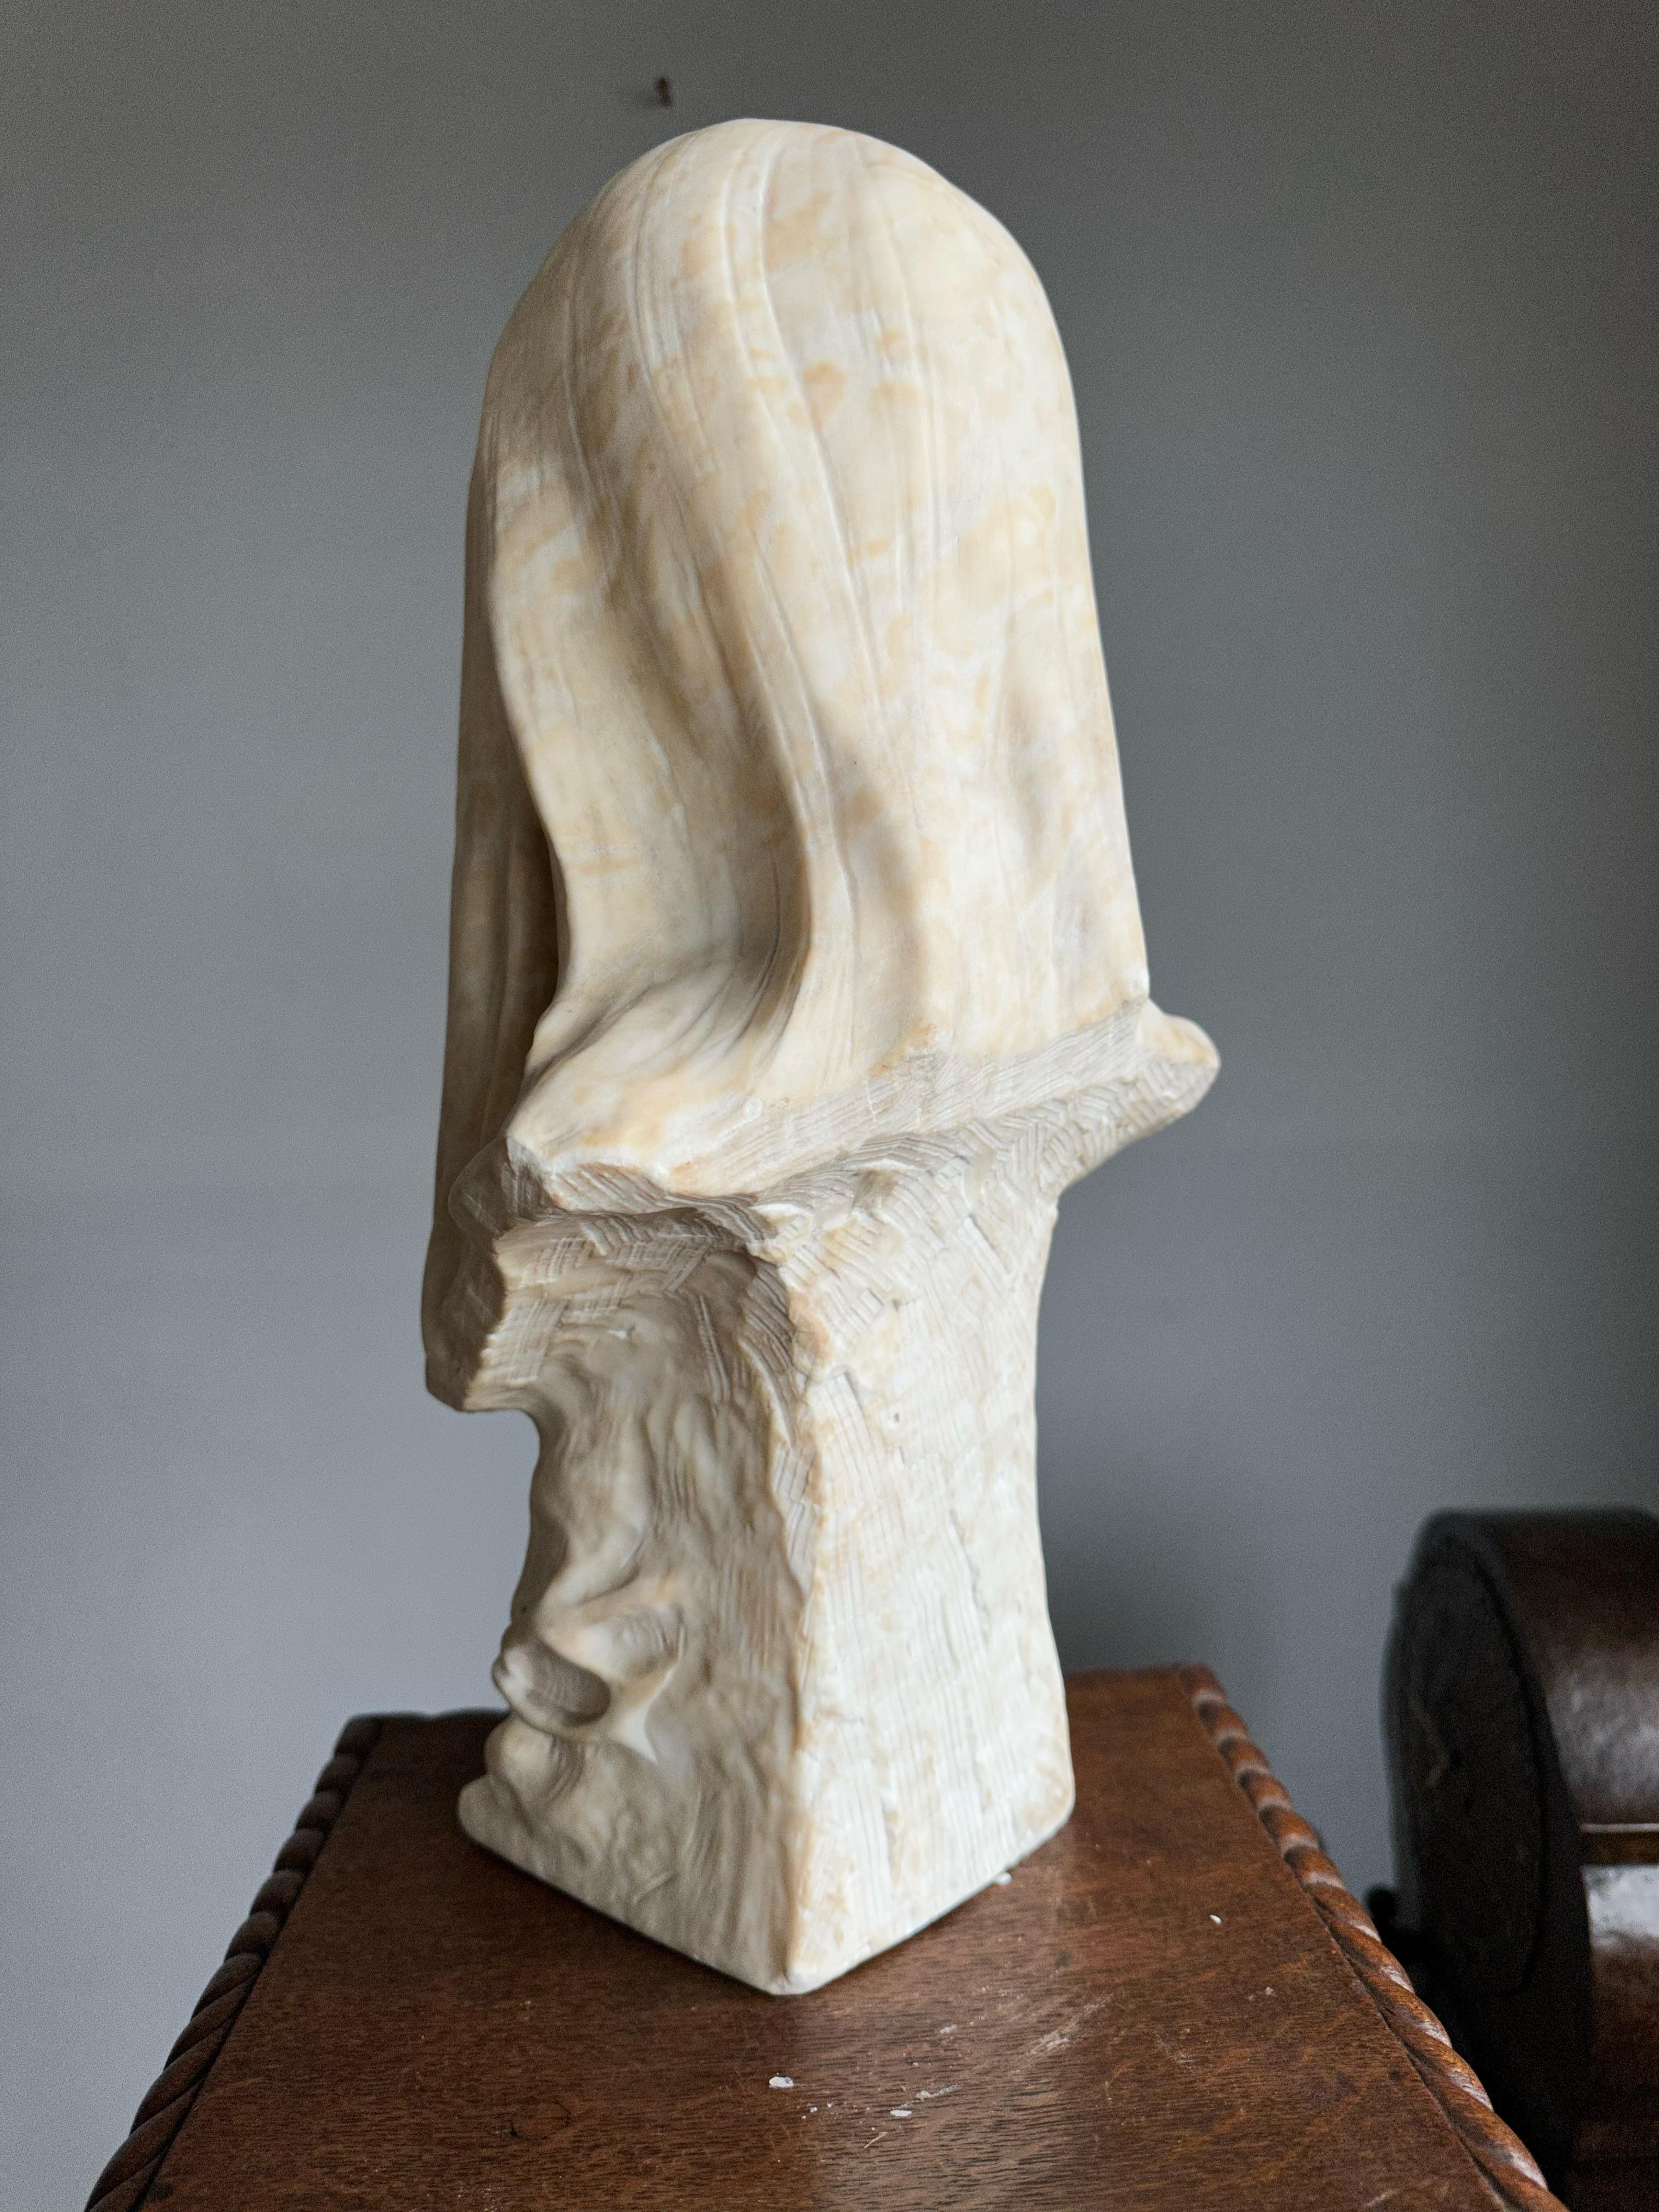 Antique, Early 1900 Large Hand Carved Alabaster Sculpture / Bust of Jesus Christ For Sale 2